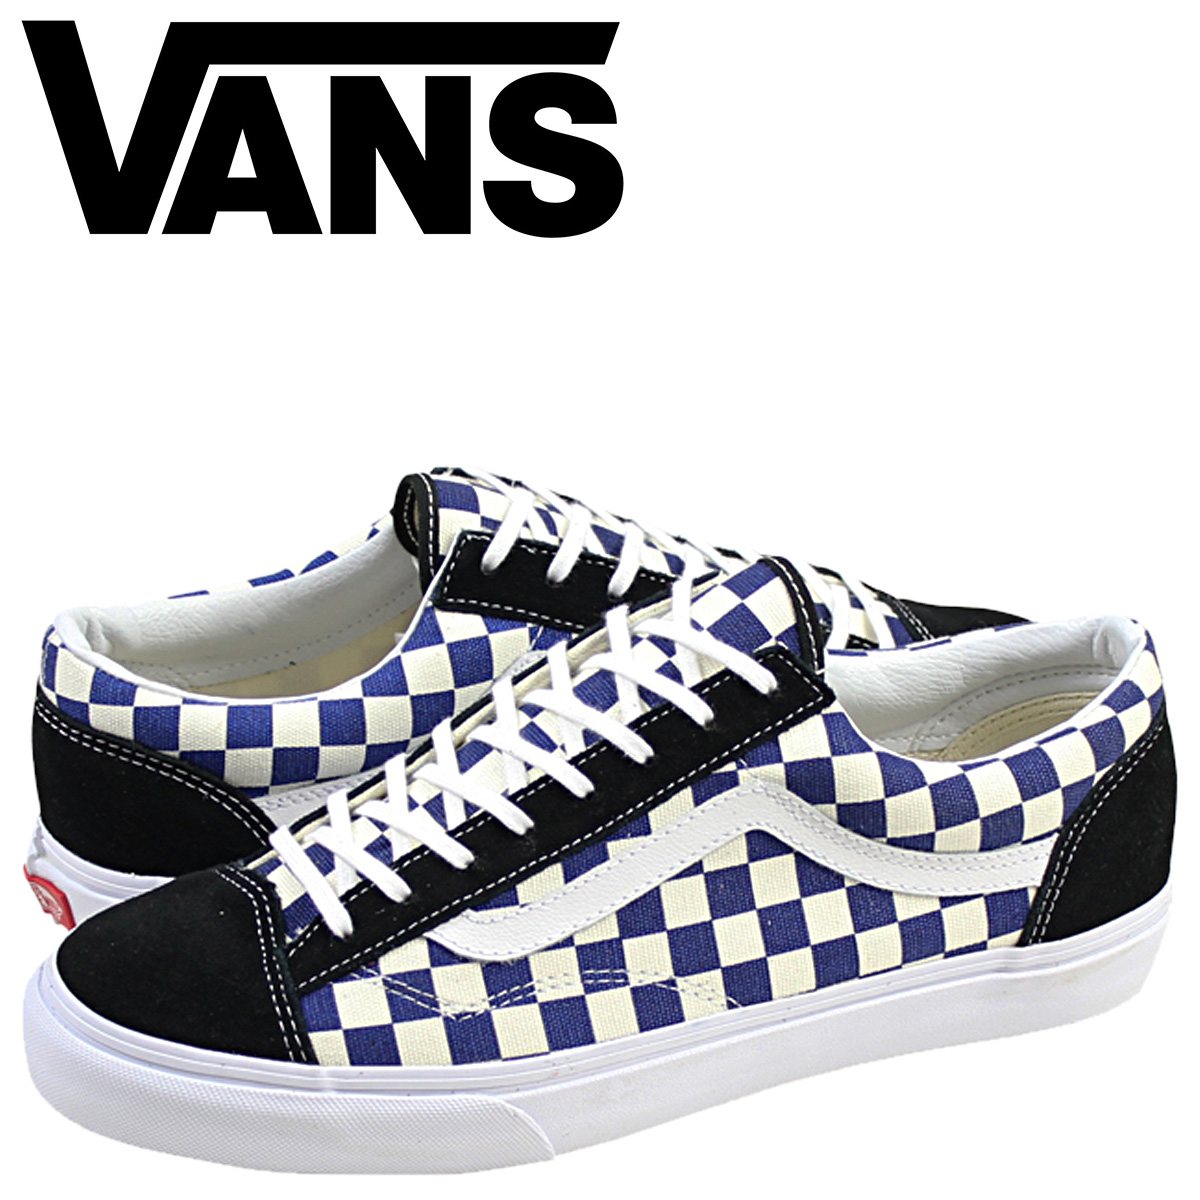 vans checkerboard style 36